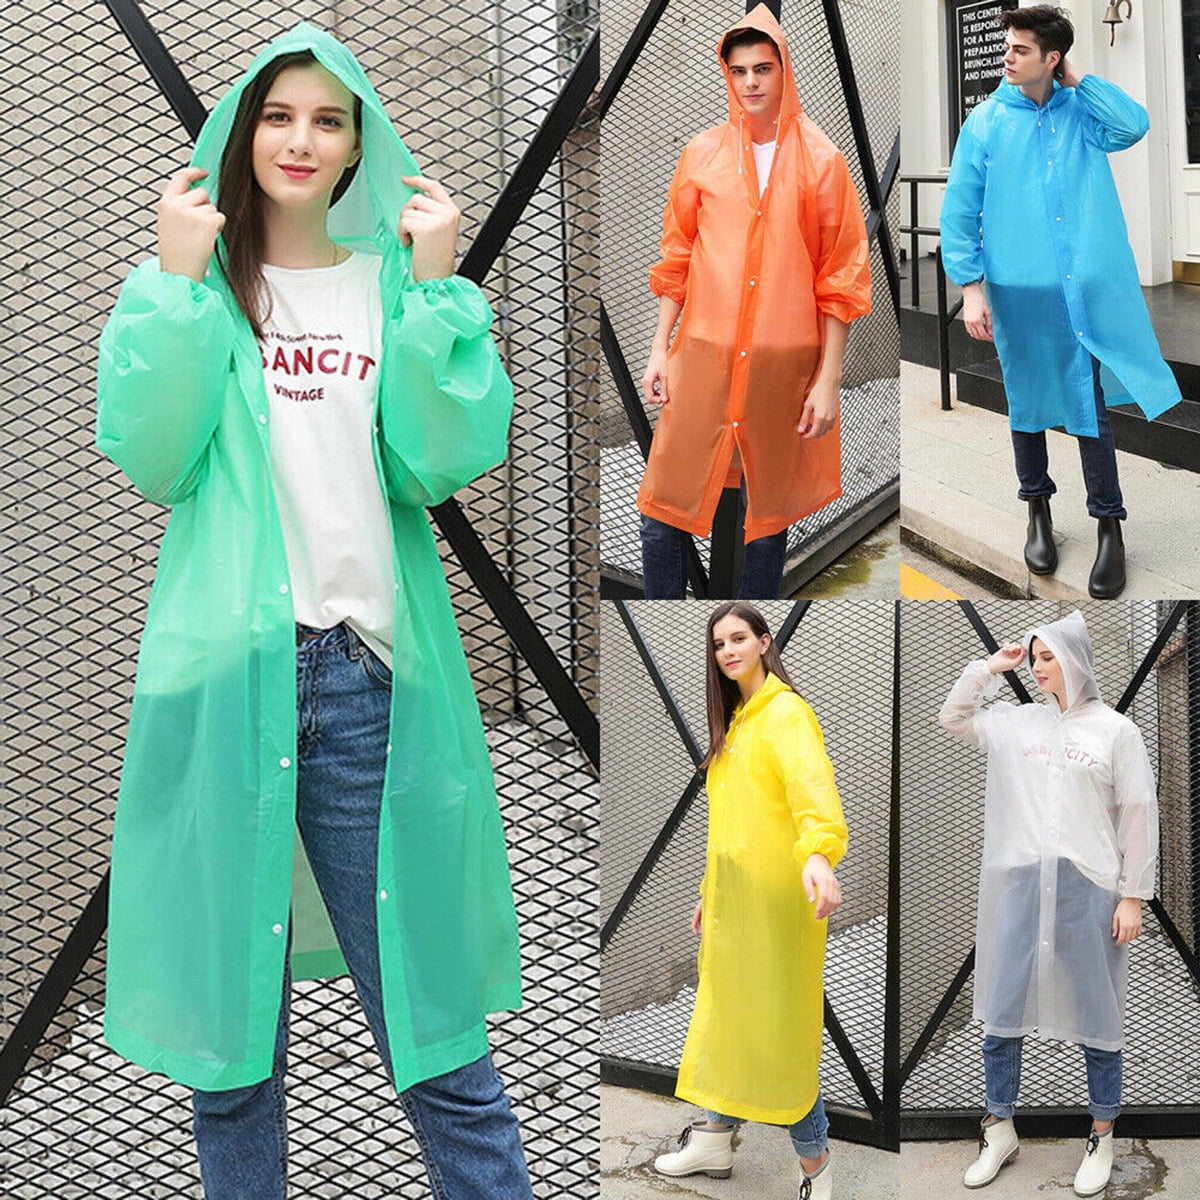 Fashionable Unisex EVA Transparent Long Environmental Raincoat for Travel Outdoor Transparent Raincoat